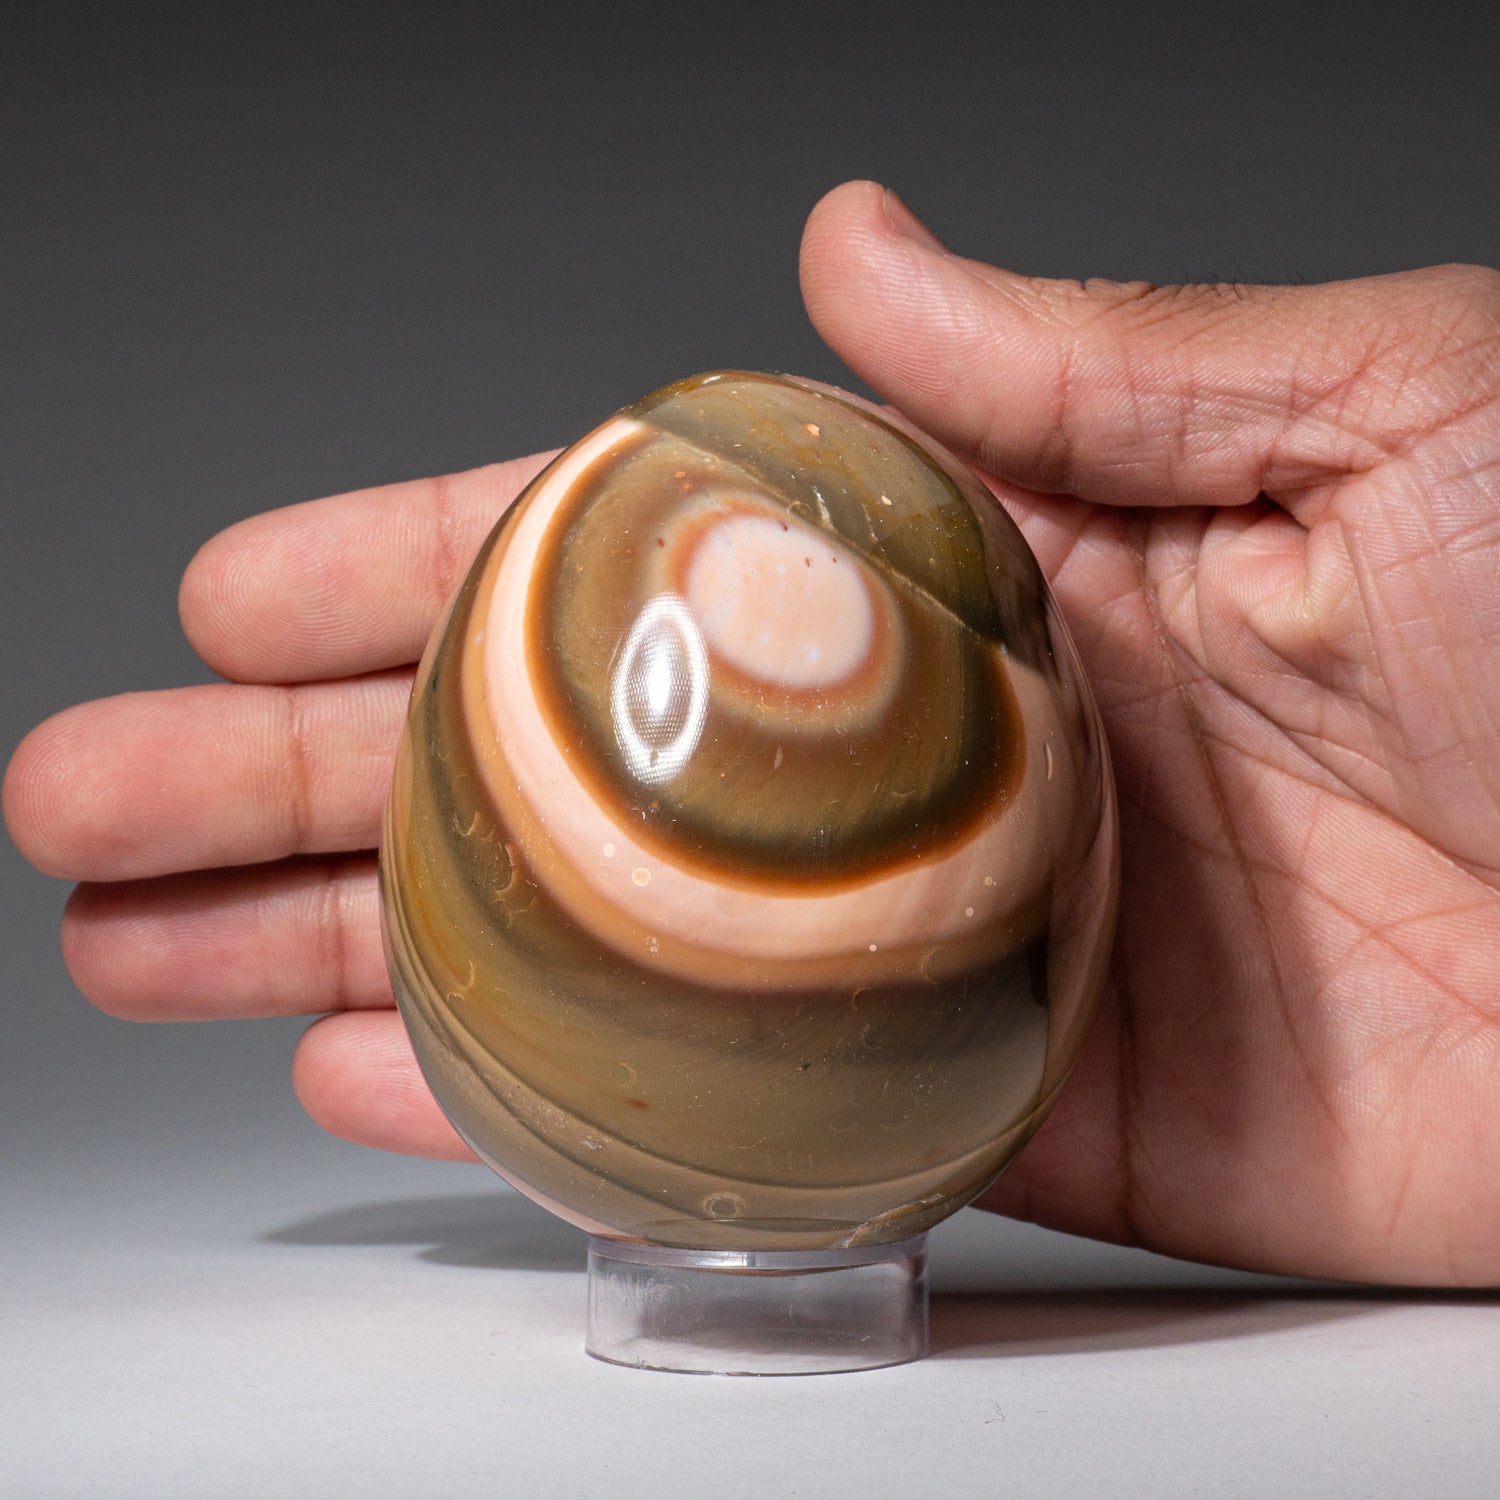 Genuine Polished Polychrome Egg from Madagascar (1.2 lbs)